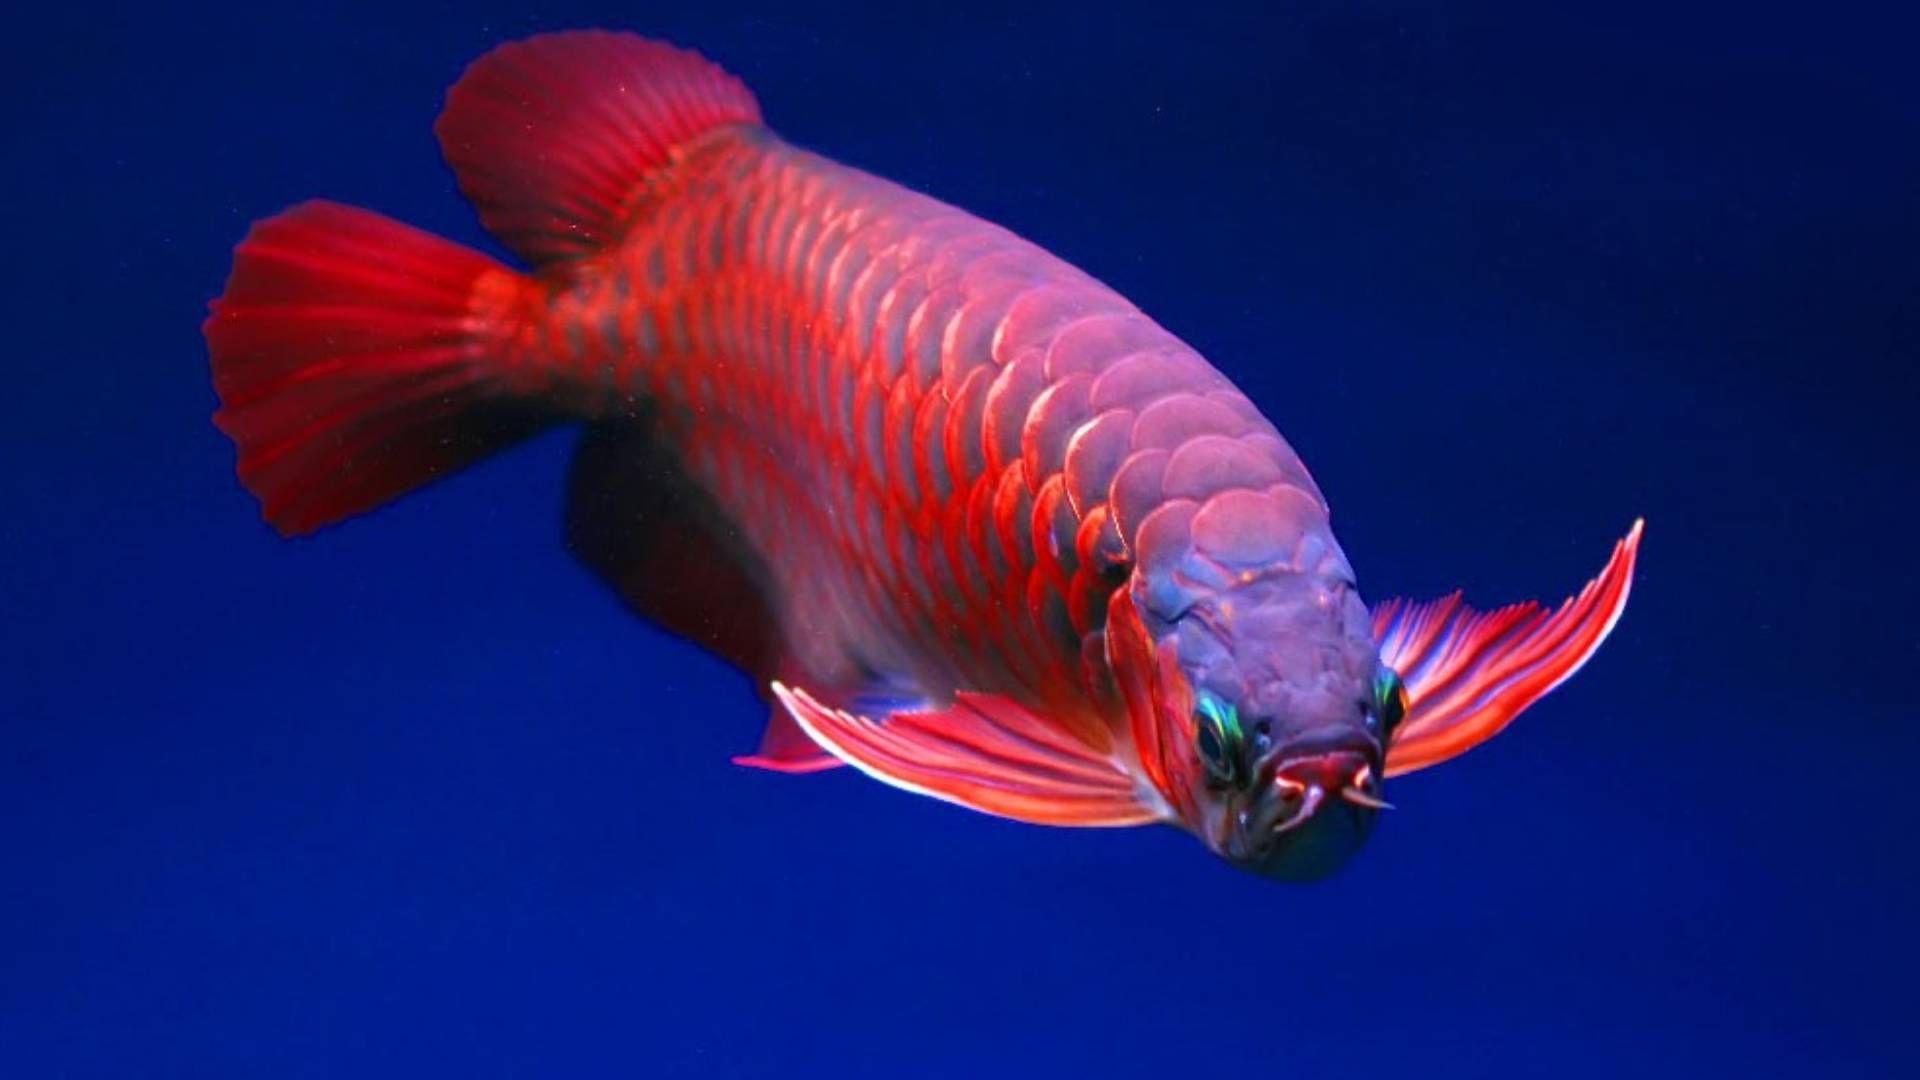 Jangan Asal Pelihara, Berikut Tips Membeli serta Merawat Ikan Arwana Agar Sehat dan Indah